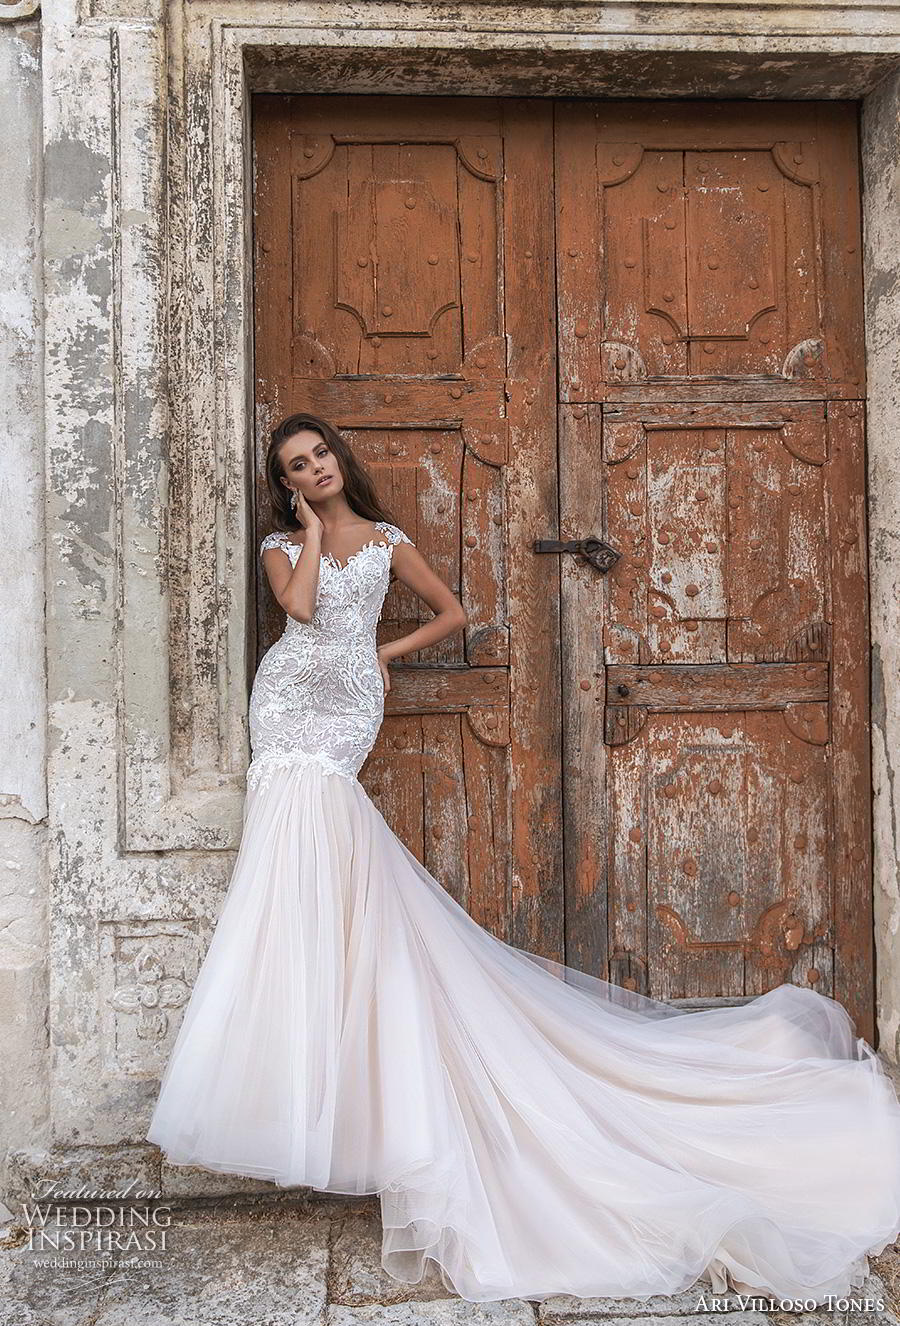 ari villoso tones 2020 bridal cap sleeves v neck heavily embellished bodice elegant glamorous mermaid wedding dress backless low back chapel train (6) mv